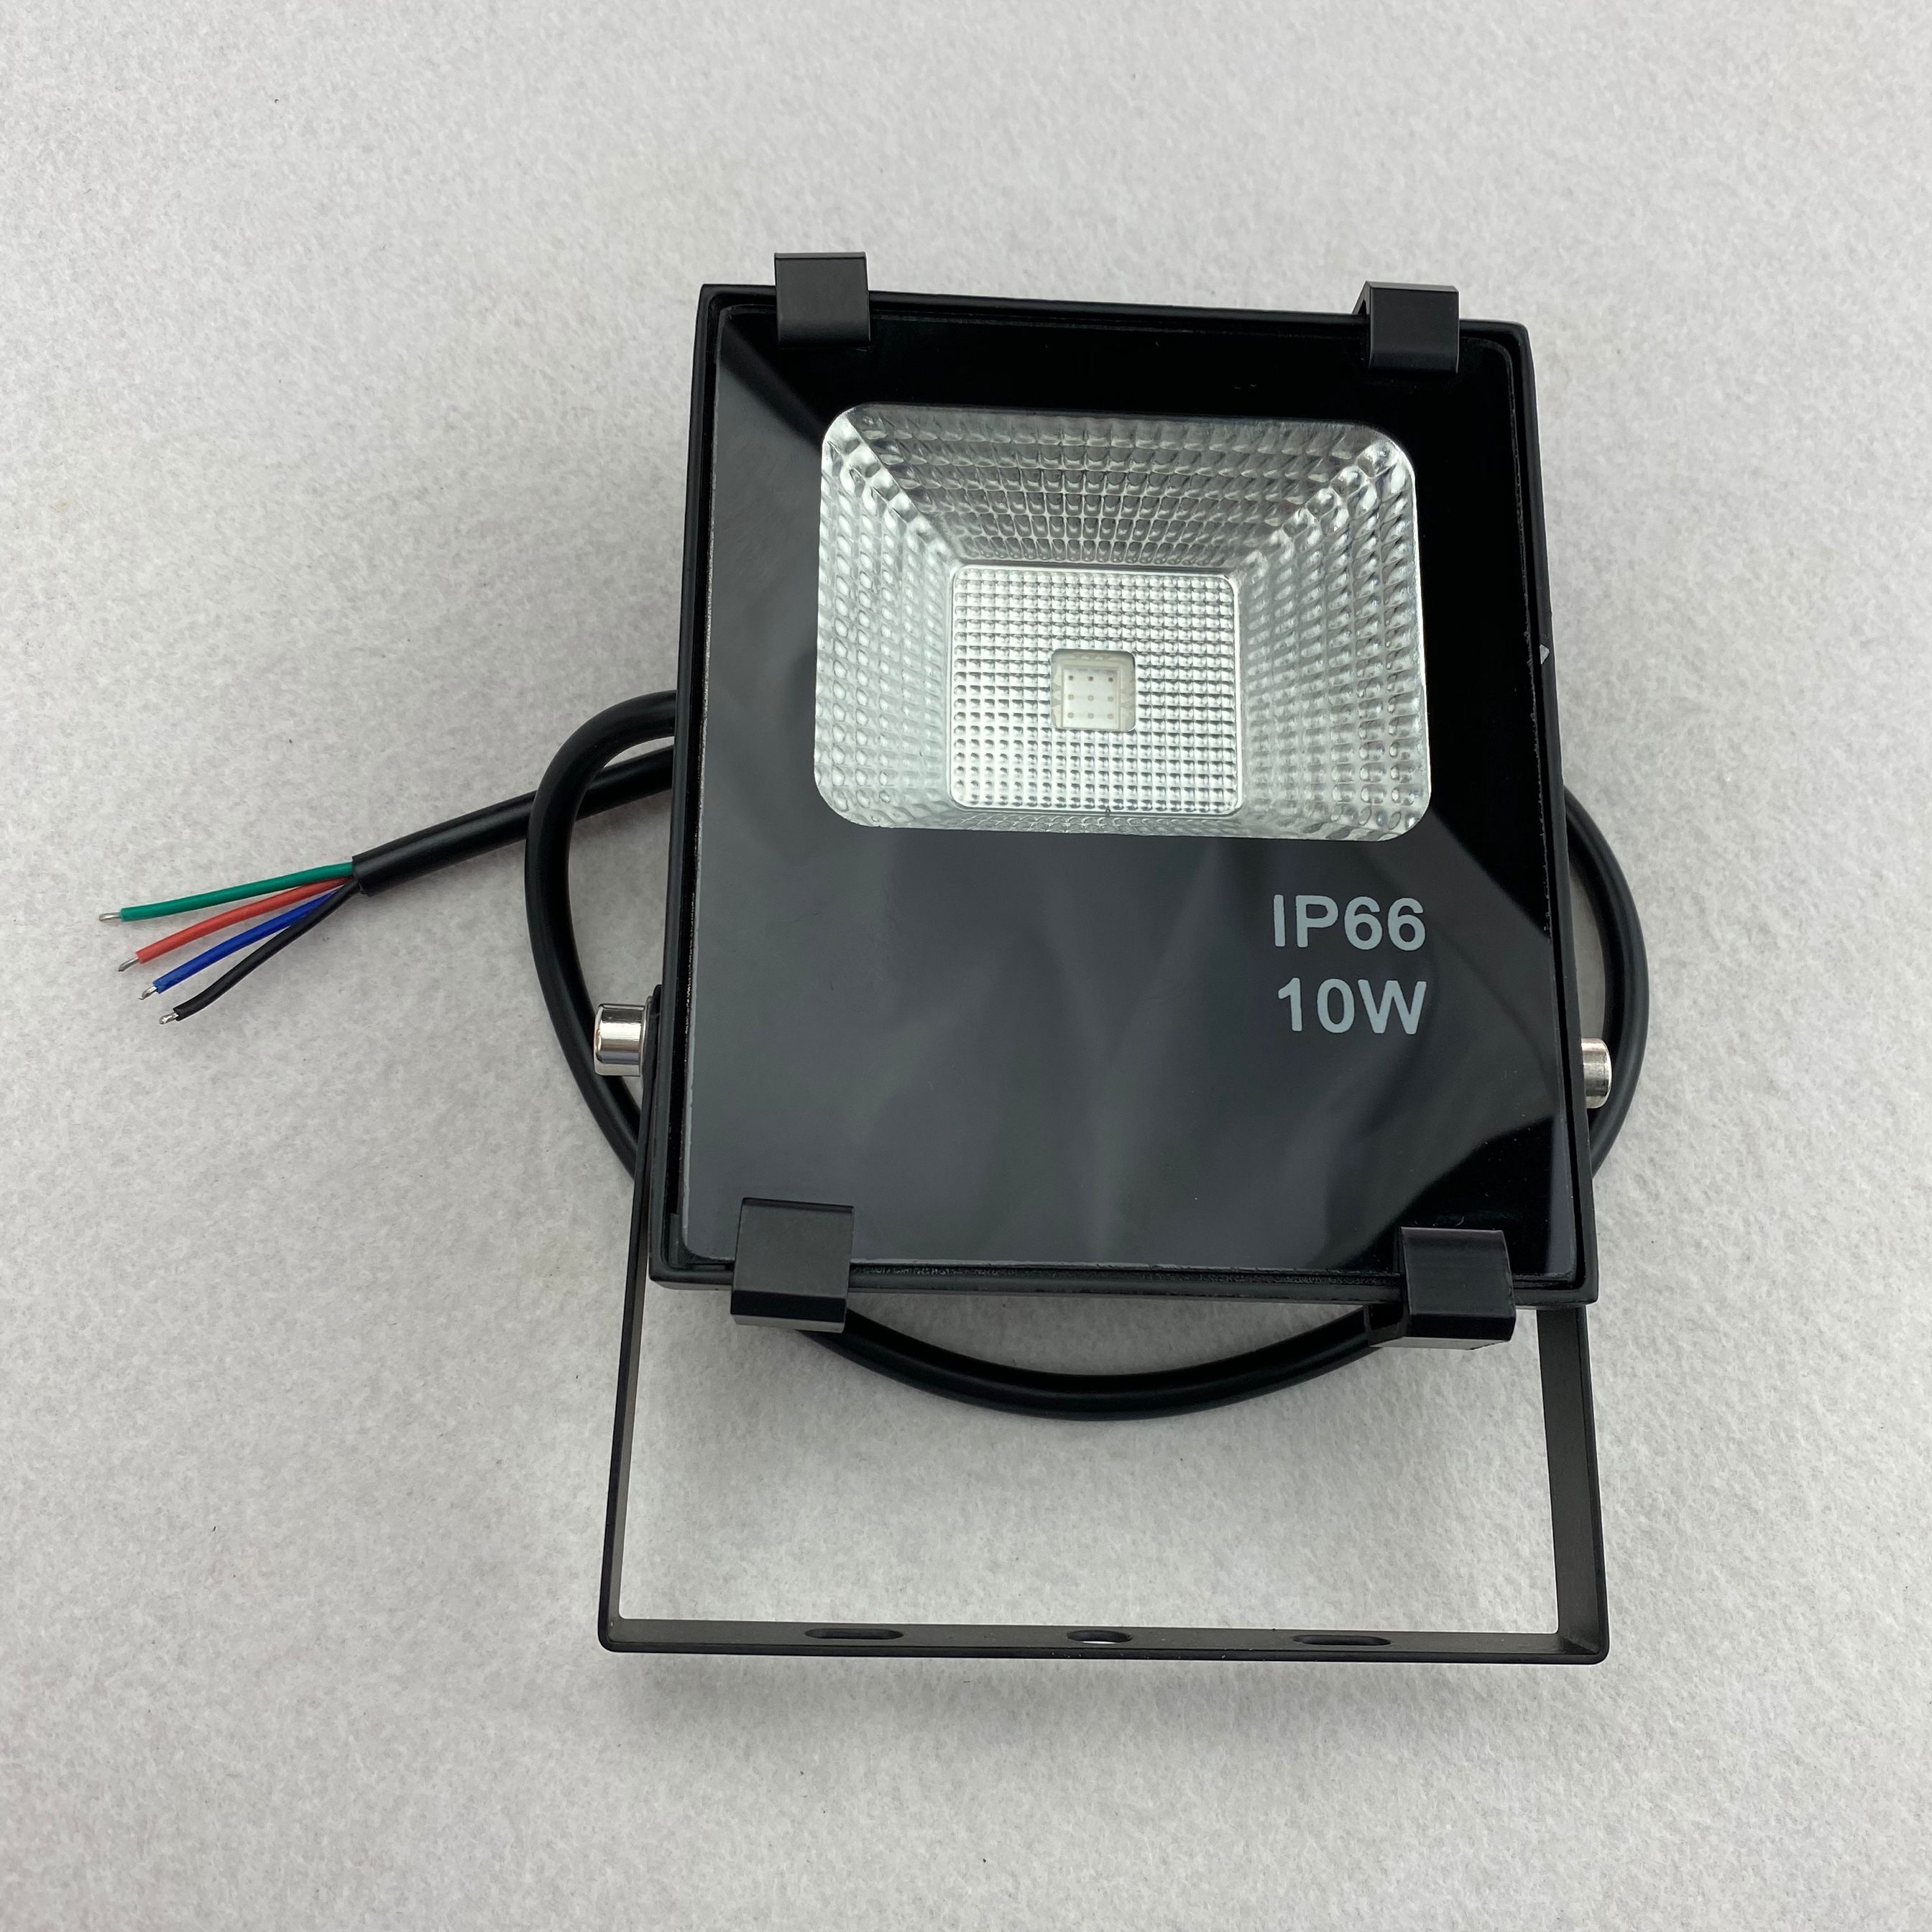 10W RGB LED flood light;DC12V input;with 4 wire PWM driver inside